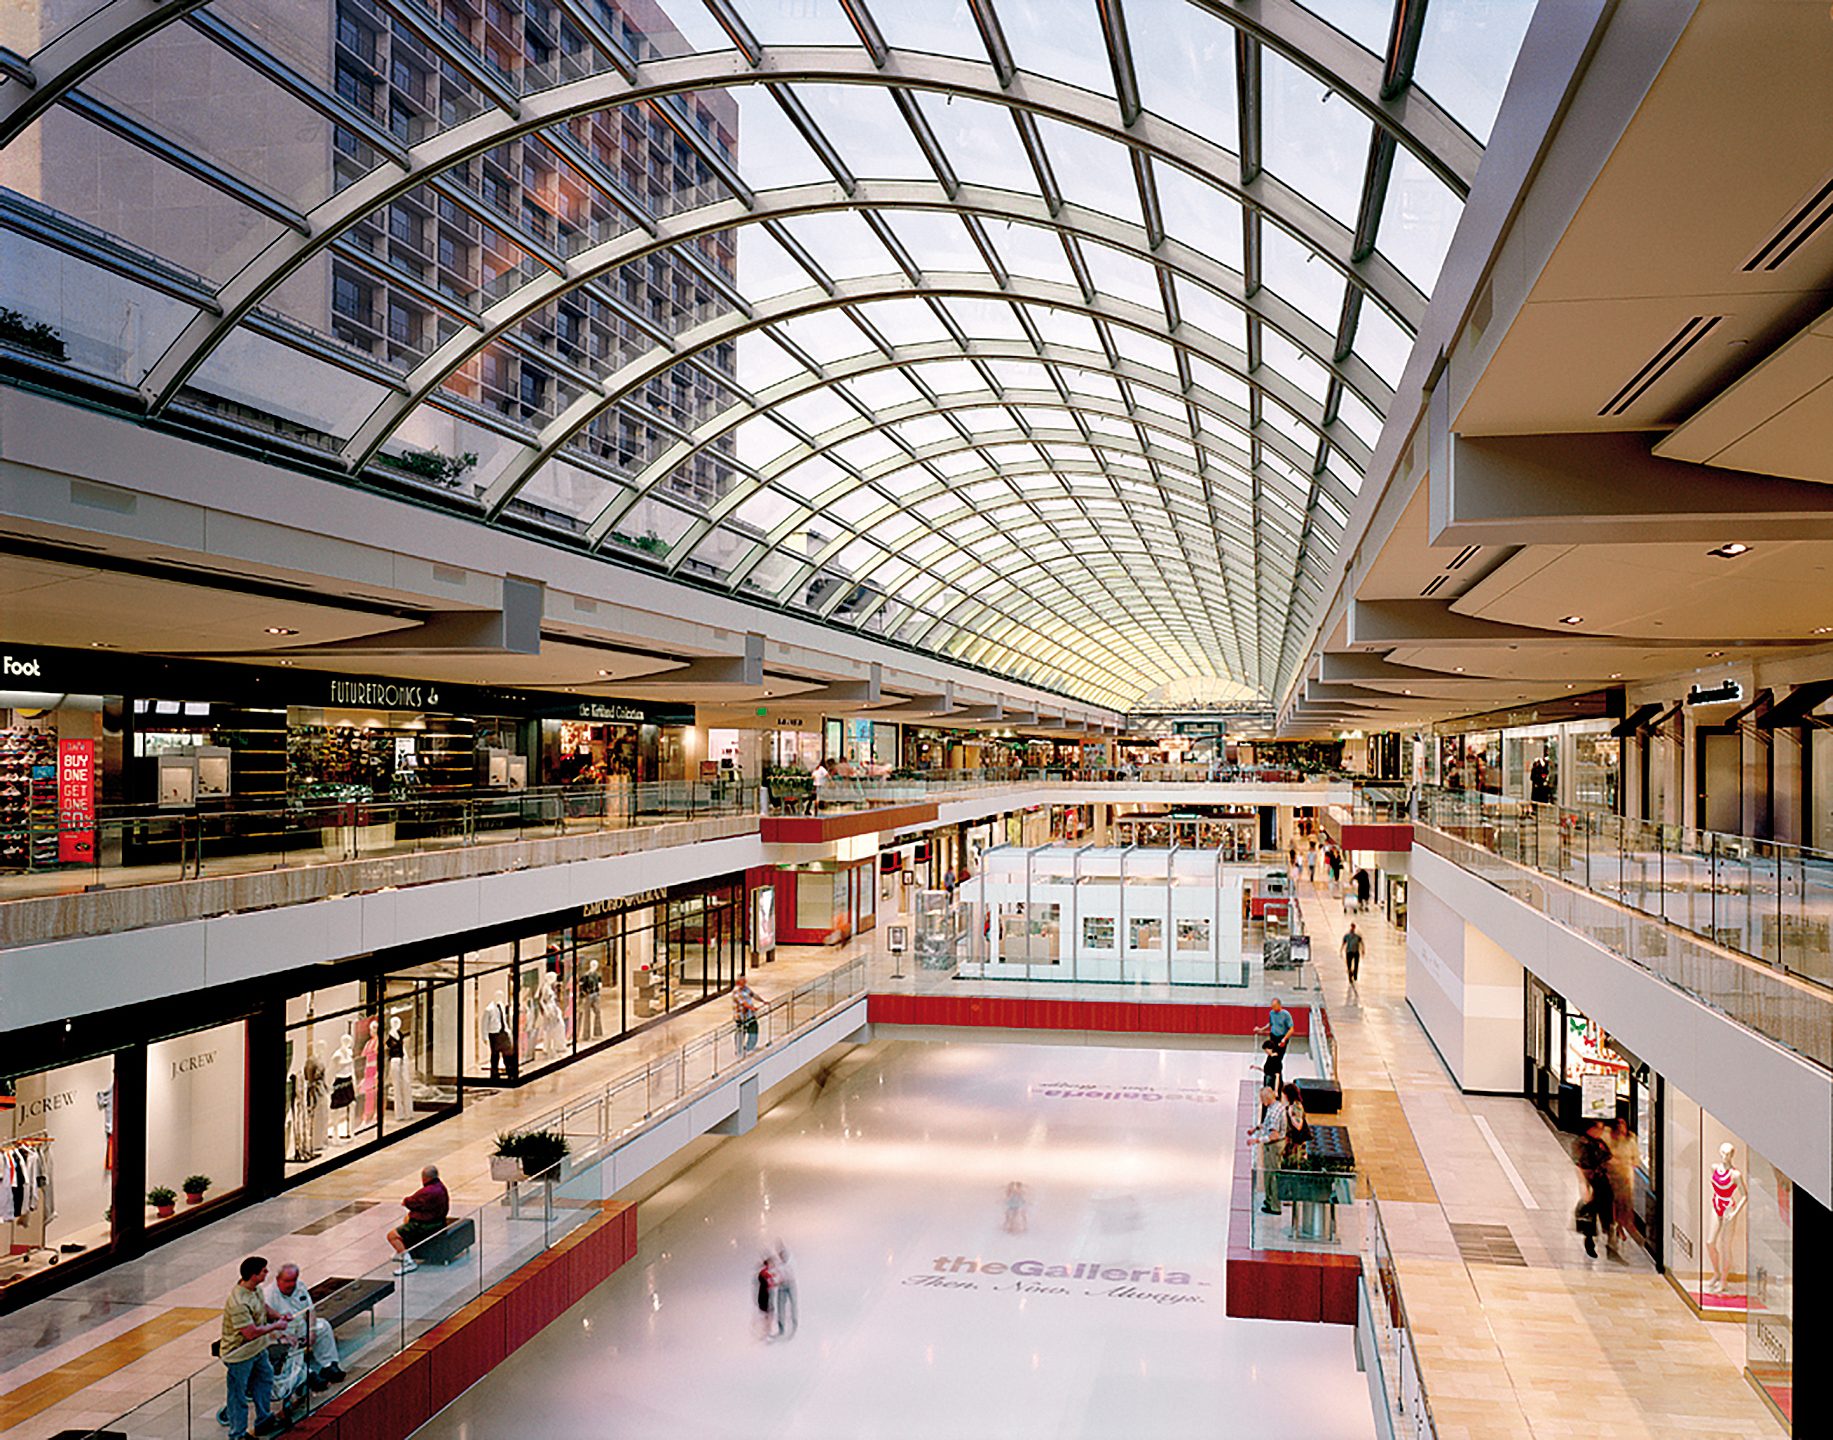 Houston Galleria Mall customers recount visit during main break